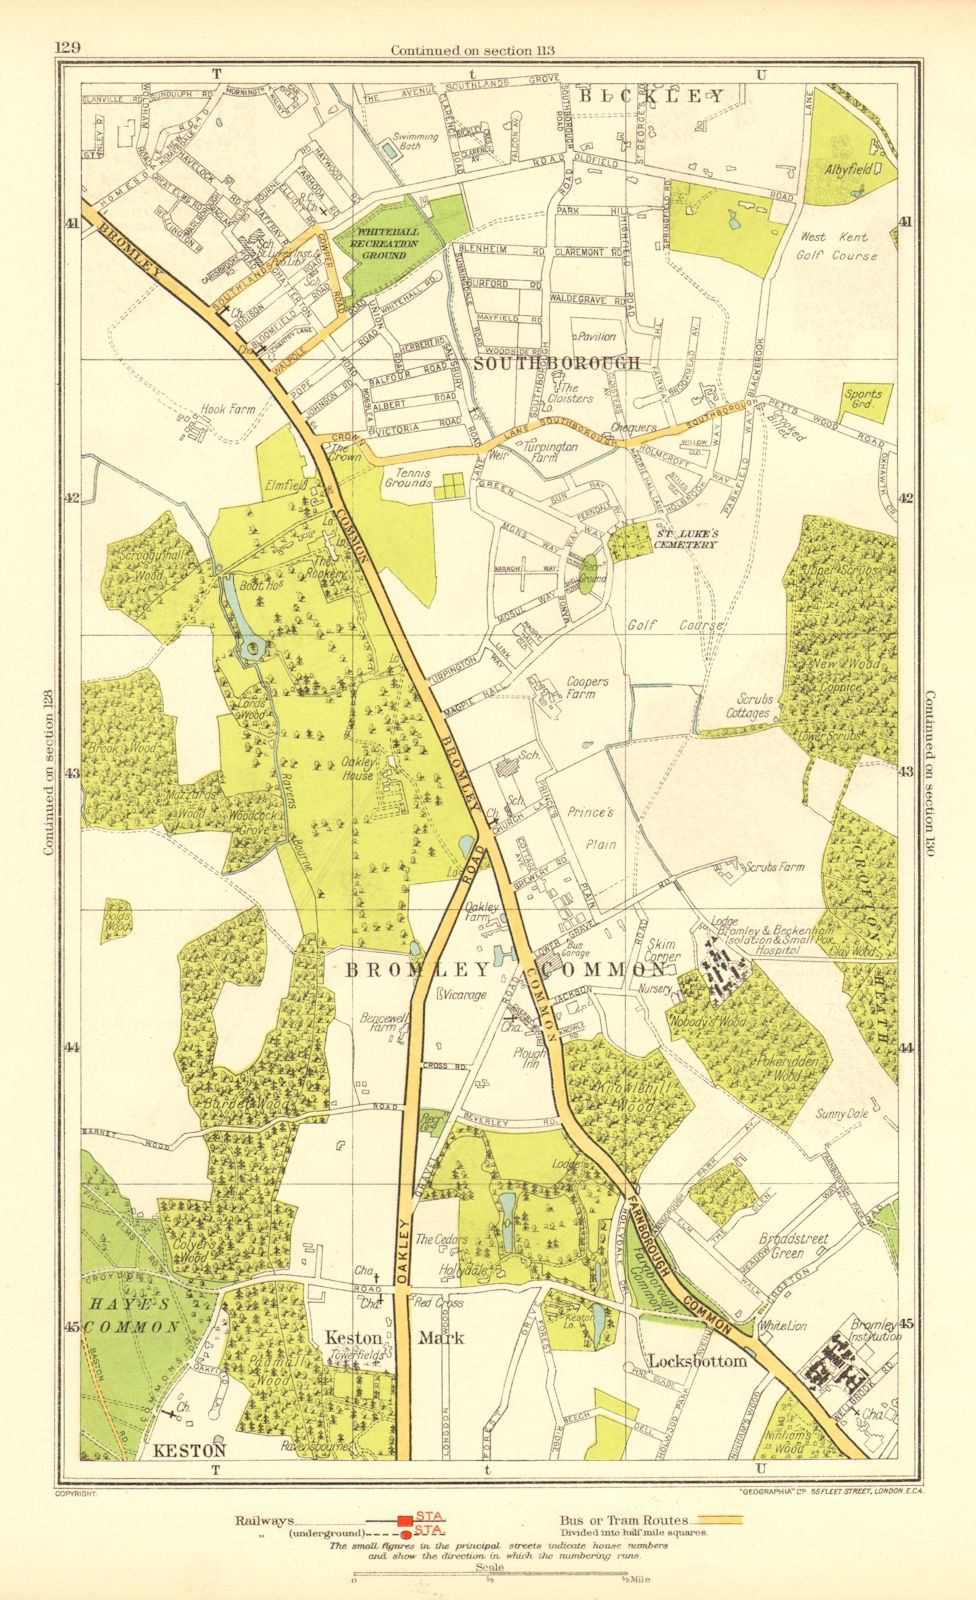 BROMLEY COMMON. Keston Keston Mark Locksbottom Southborough Bromley 1937 map